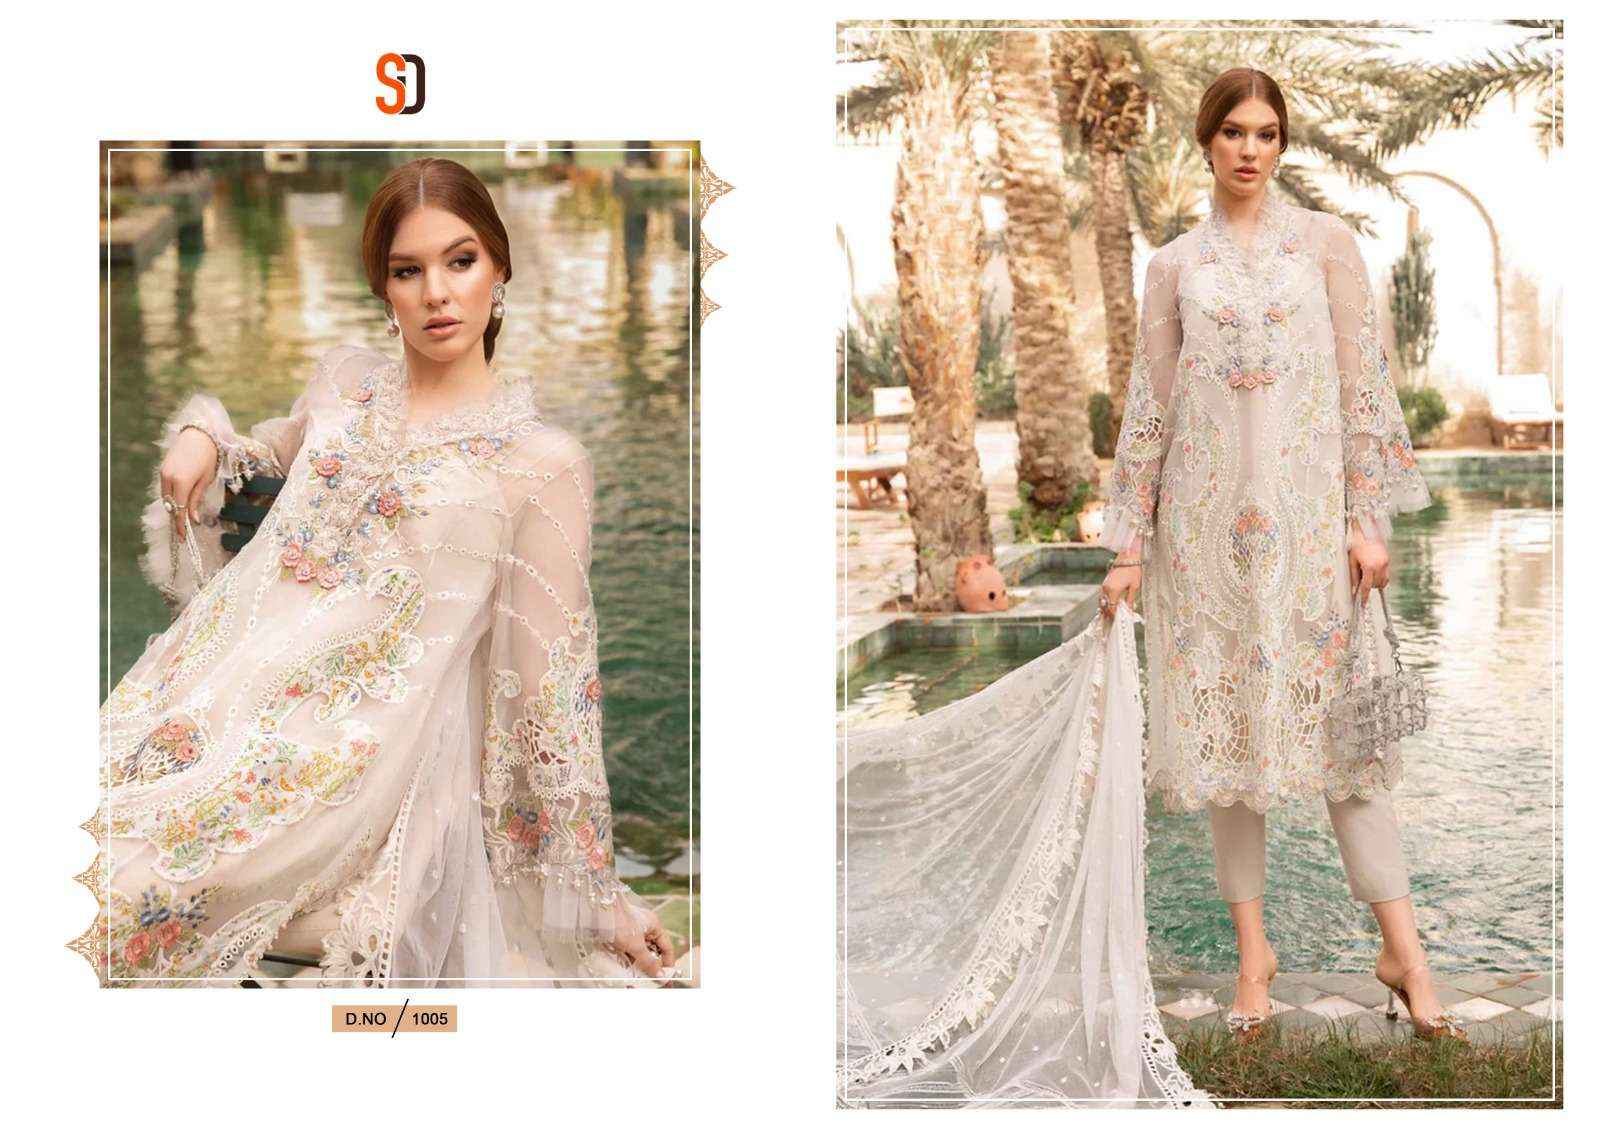 Shraddha Designer Maria B Lawn Vol 1 Cotton Dress Material 6 pcs Catalogue